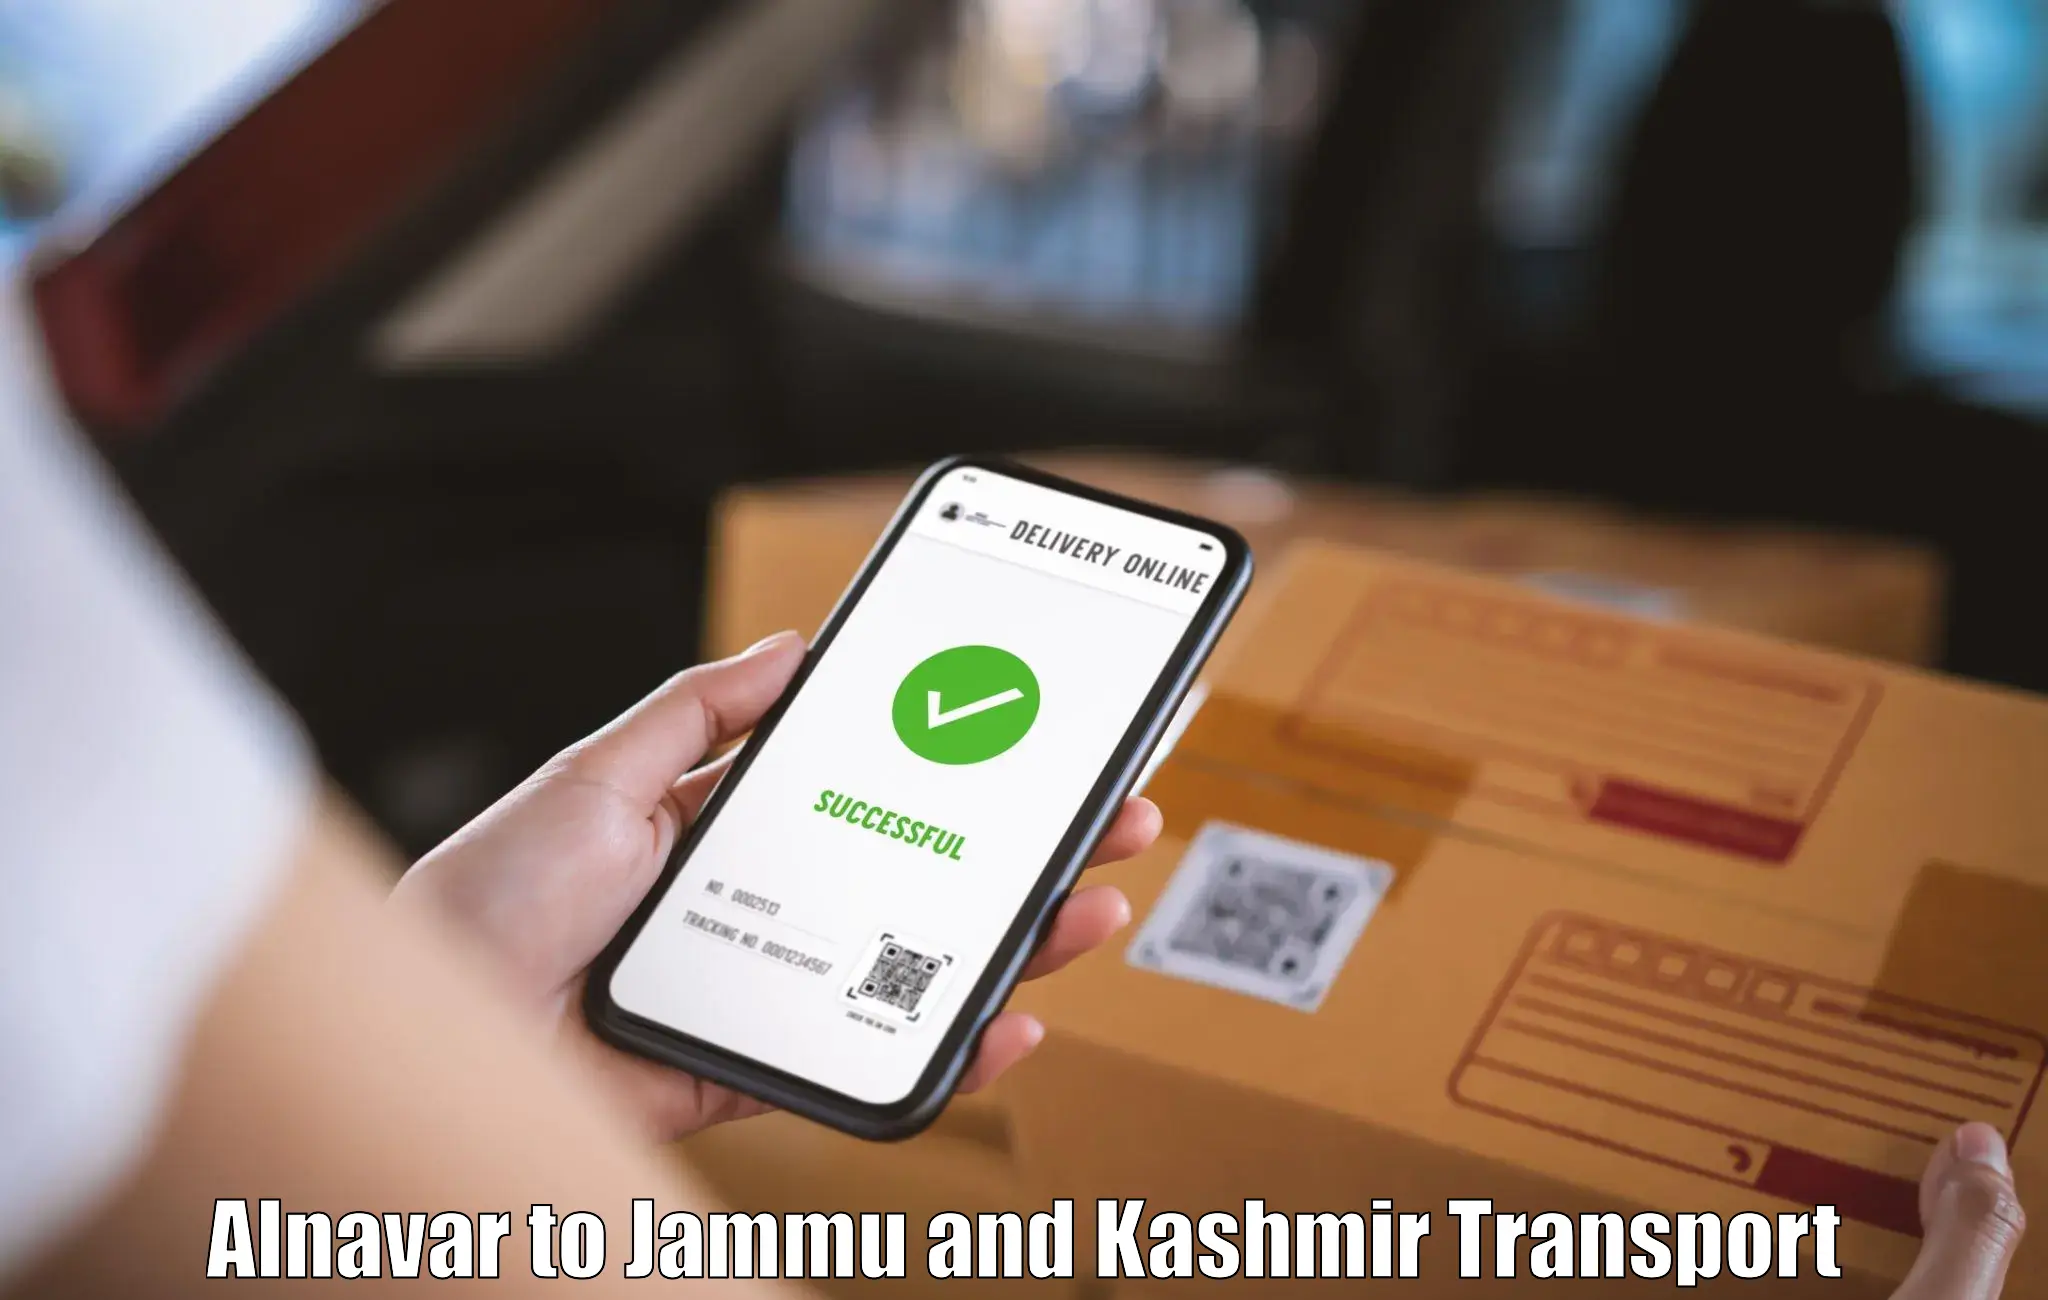 Pick up transport service Alnavar to Jammu and Kashmir